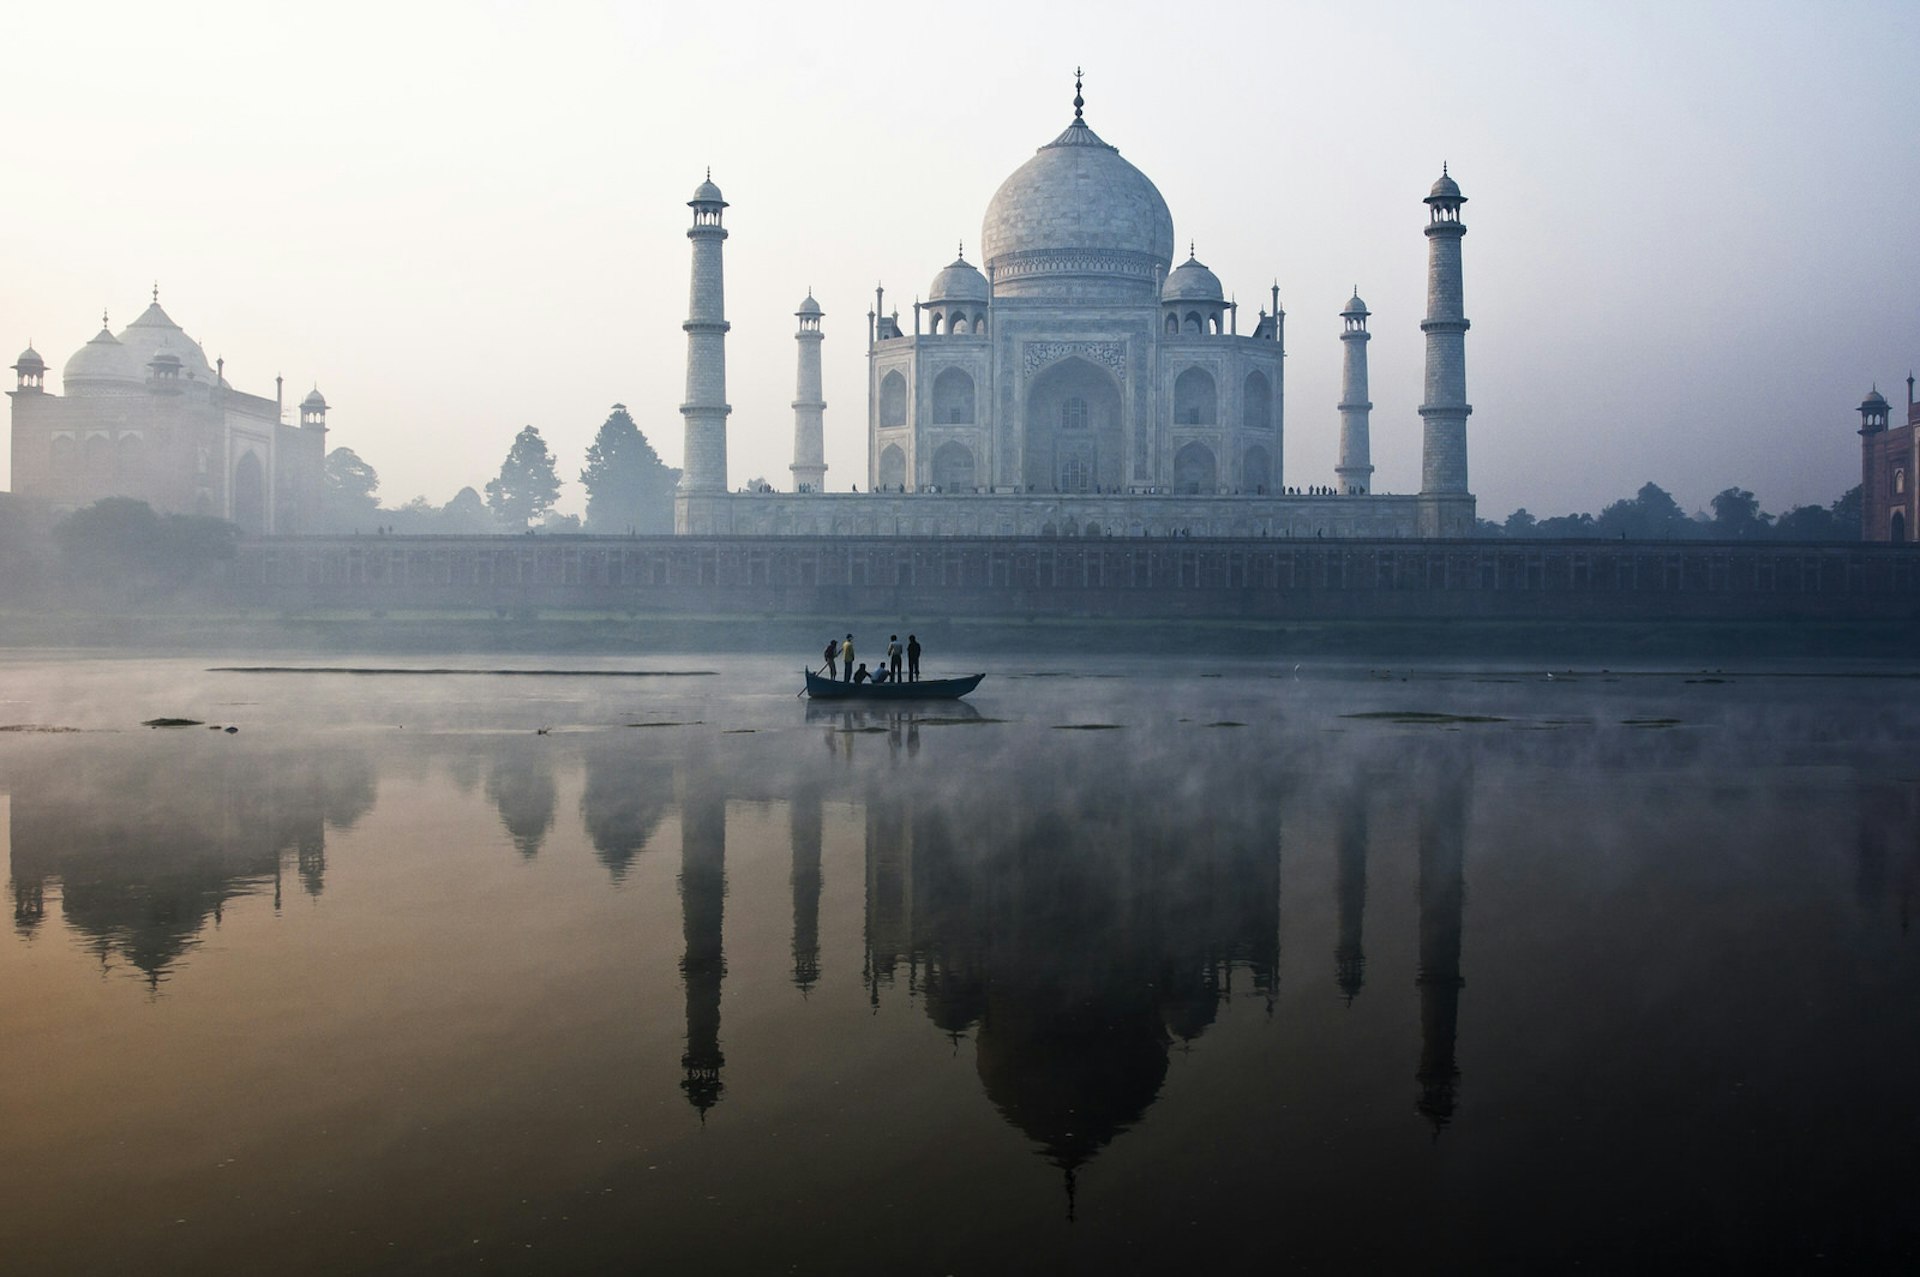 The Taj Mahal as viewed from across the Yamuna River © Jitendra Singh / 500px